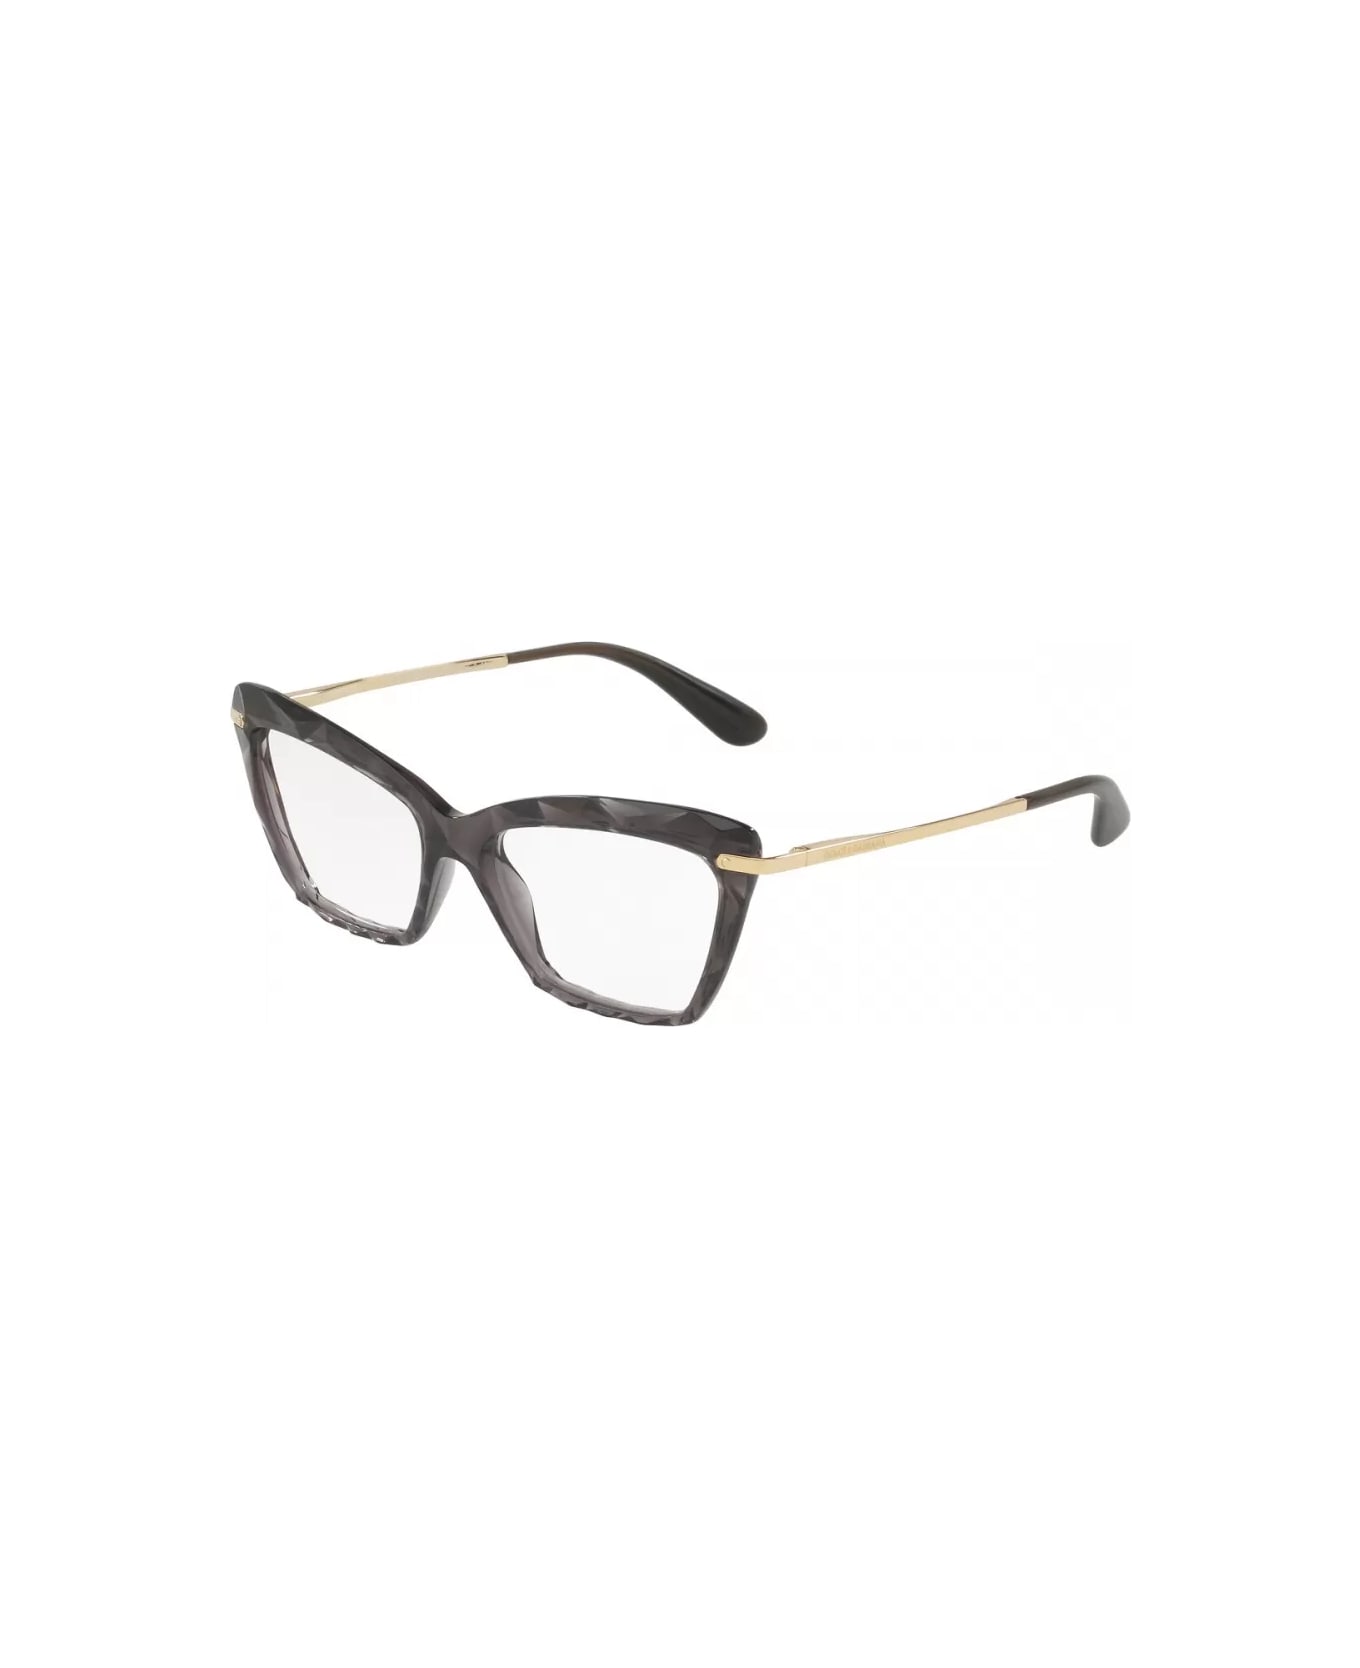 Dolce & Gabbana Eyewear DG5025 504 Glasses